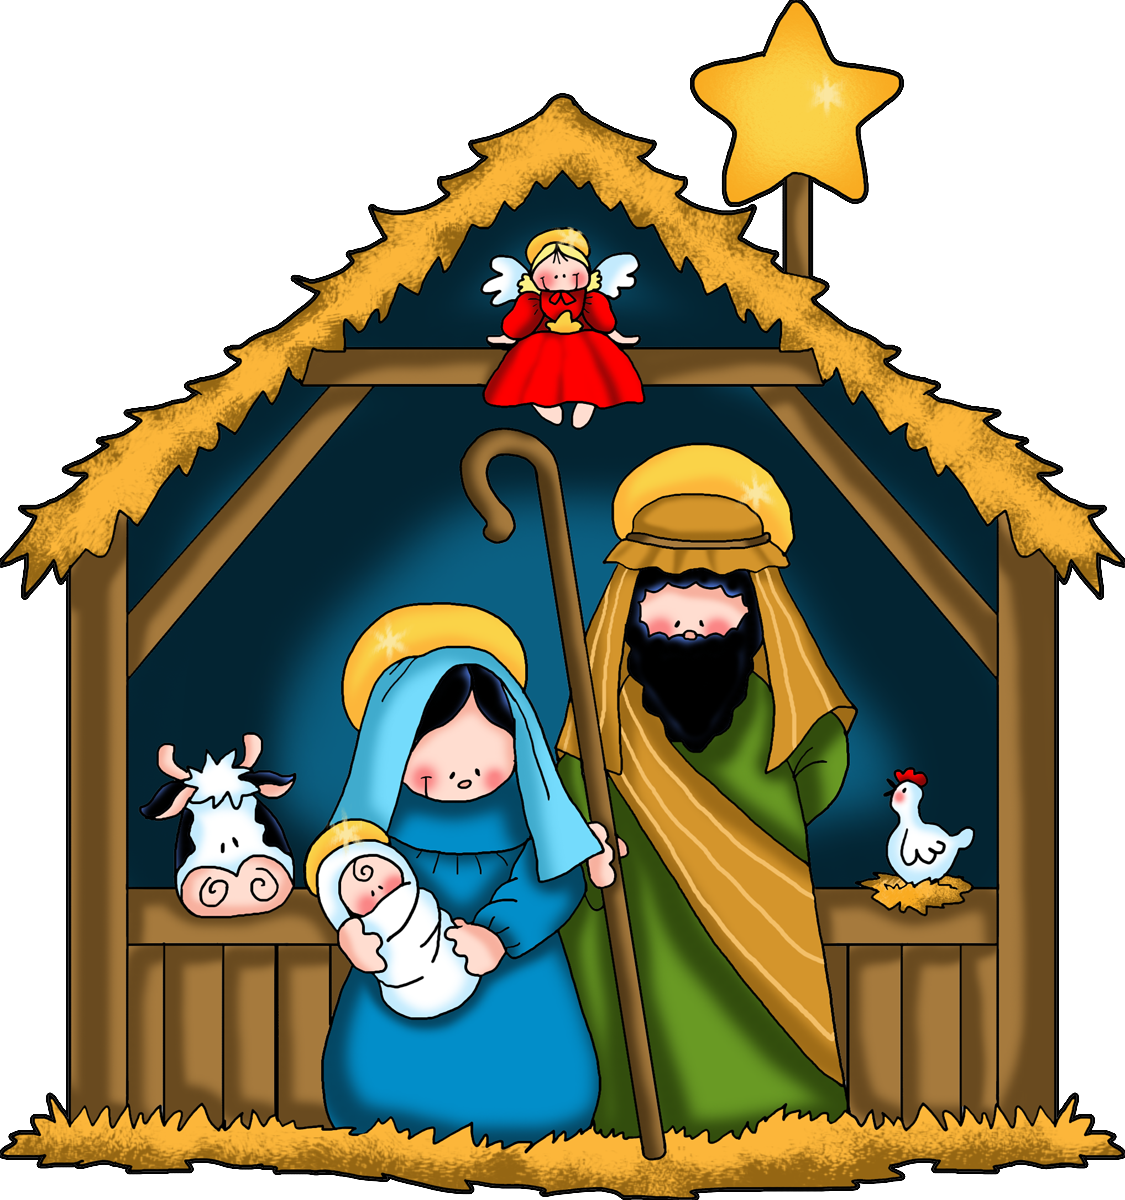 lds clipart nativity